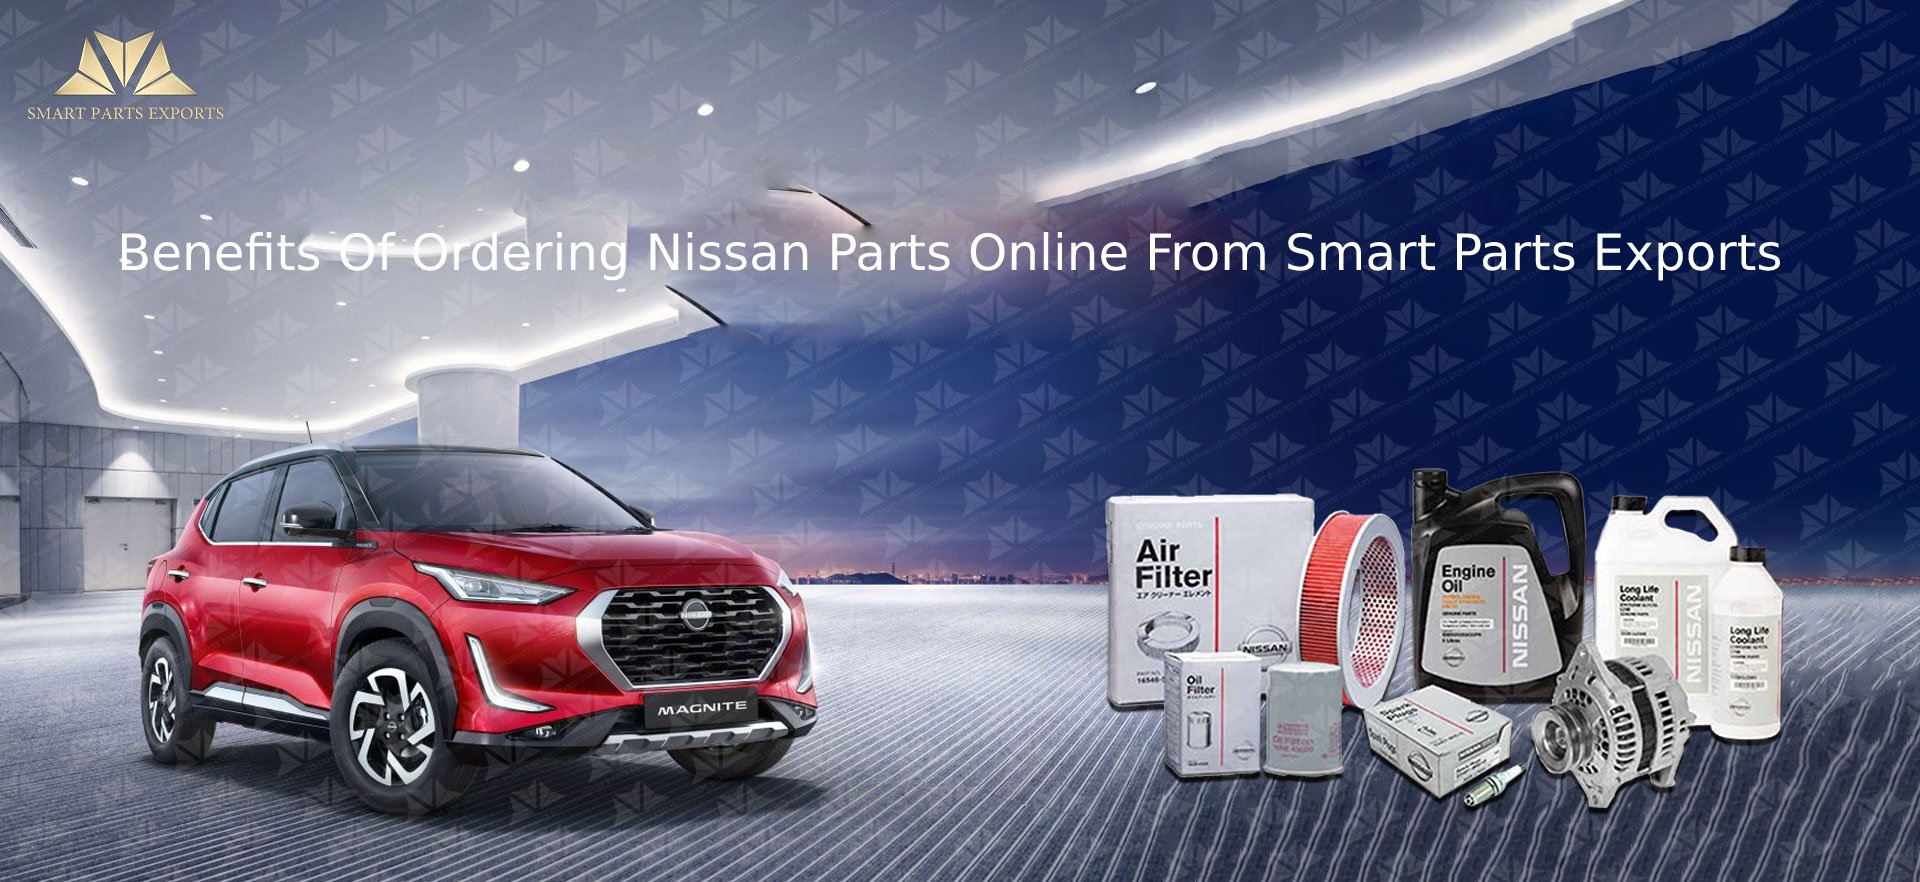 Exporter of Nissan Genuine Parts Online: Smart Parts Exports